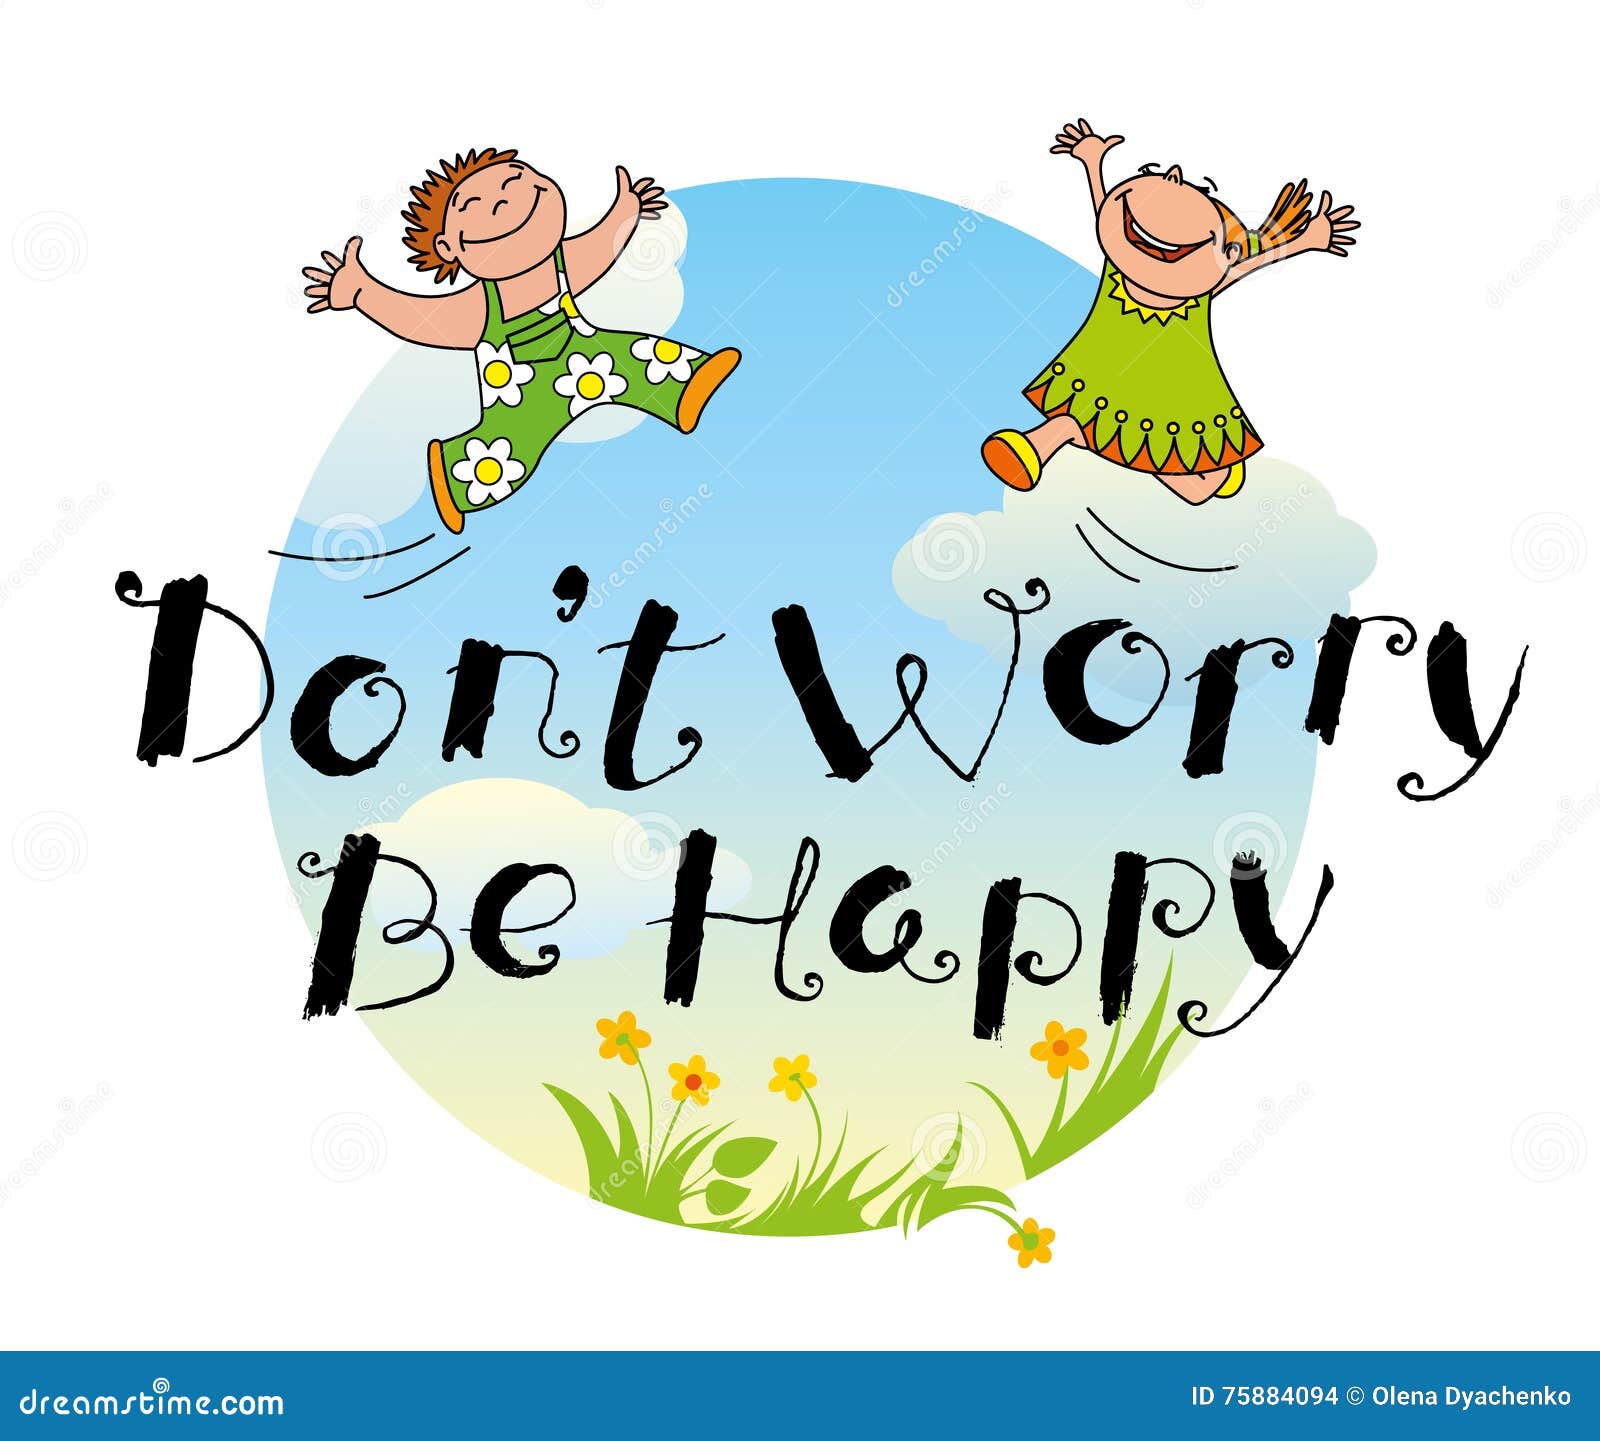 Be happy com. Don't worry be Happy картинки. Открытка don't worry be Happy. Надпись don't worry be Happy. Don't worry be Happy обои.